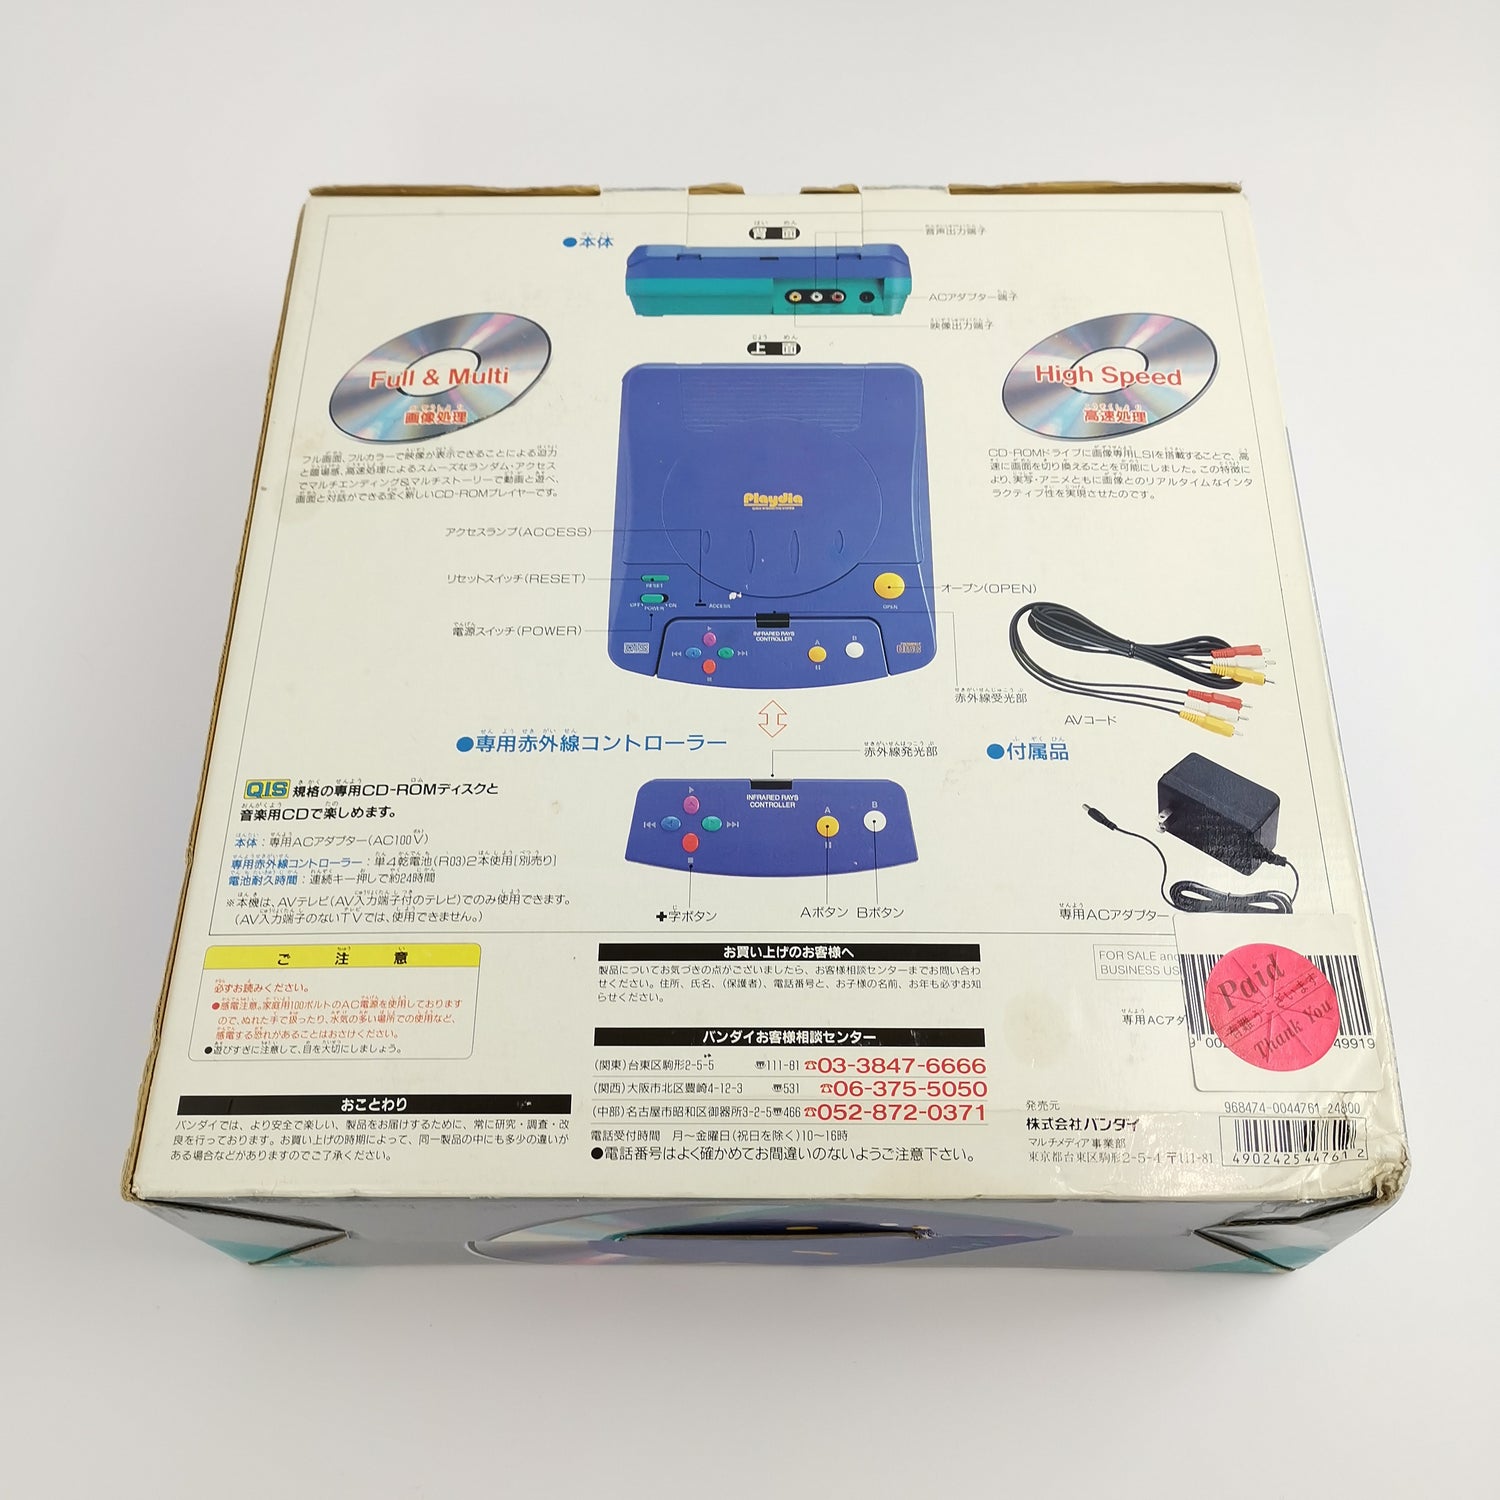 Japanische Bandai Konsole : Playdia - Quick Interactive System | OVP JAPAN